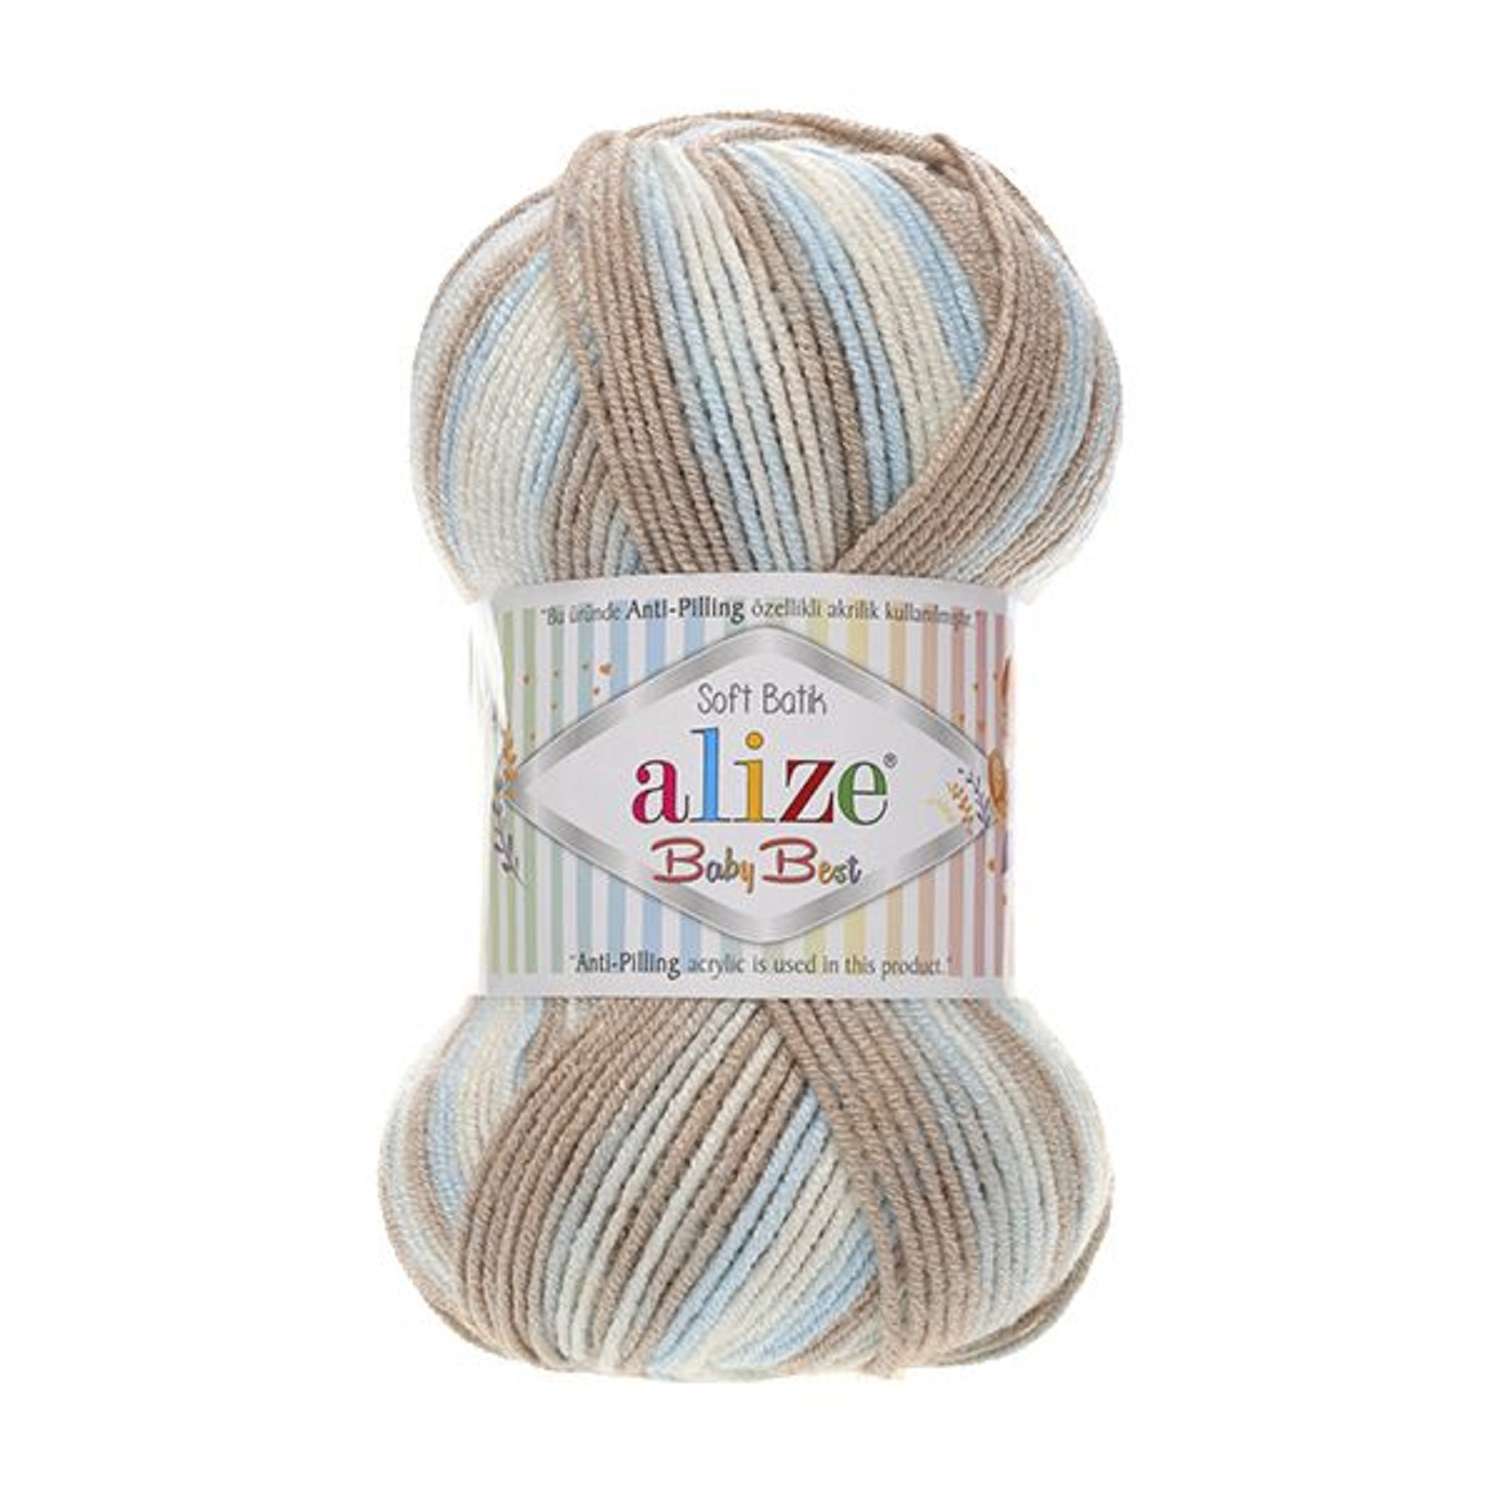 Alize Knitting Yarn Baby Best Batik